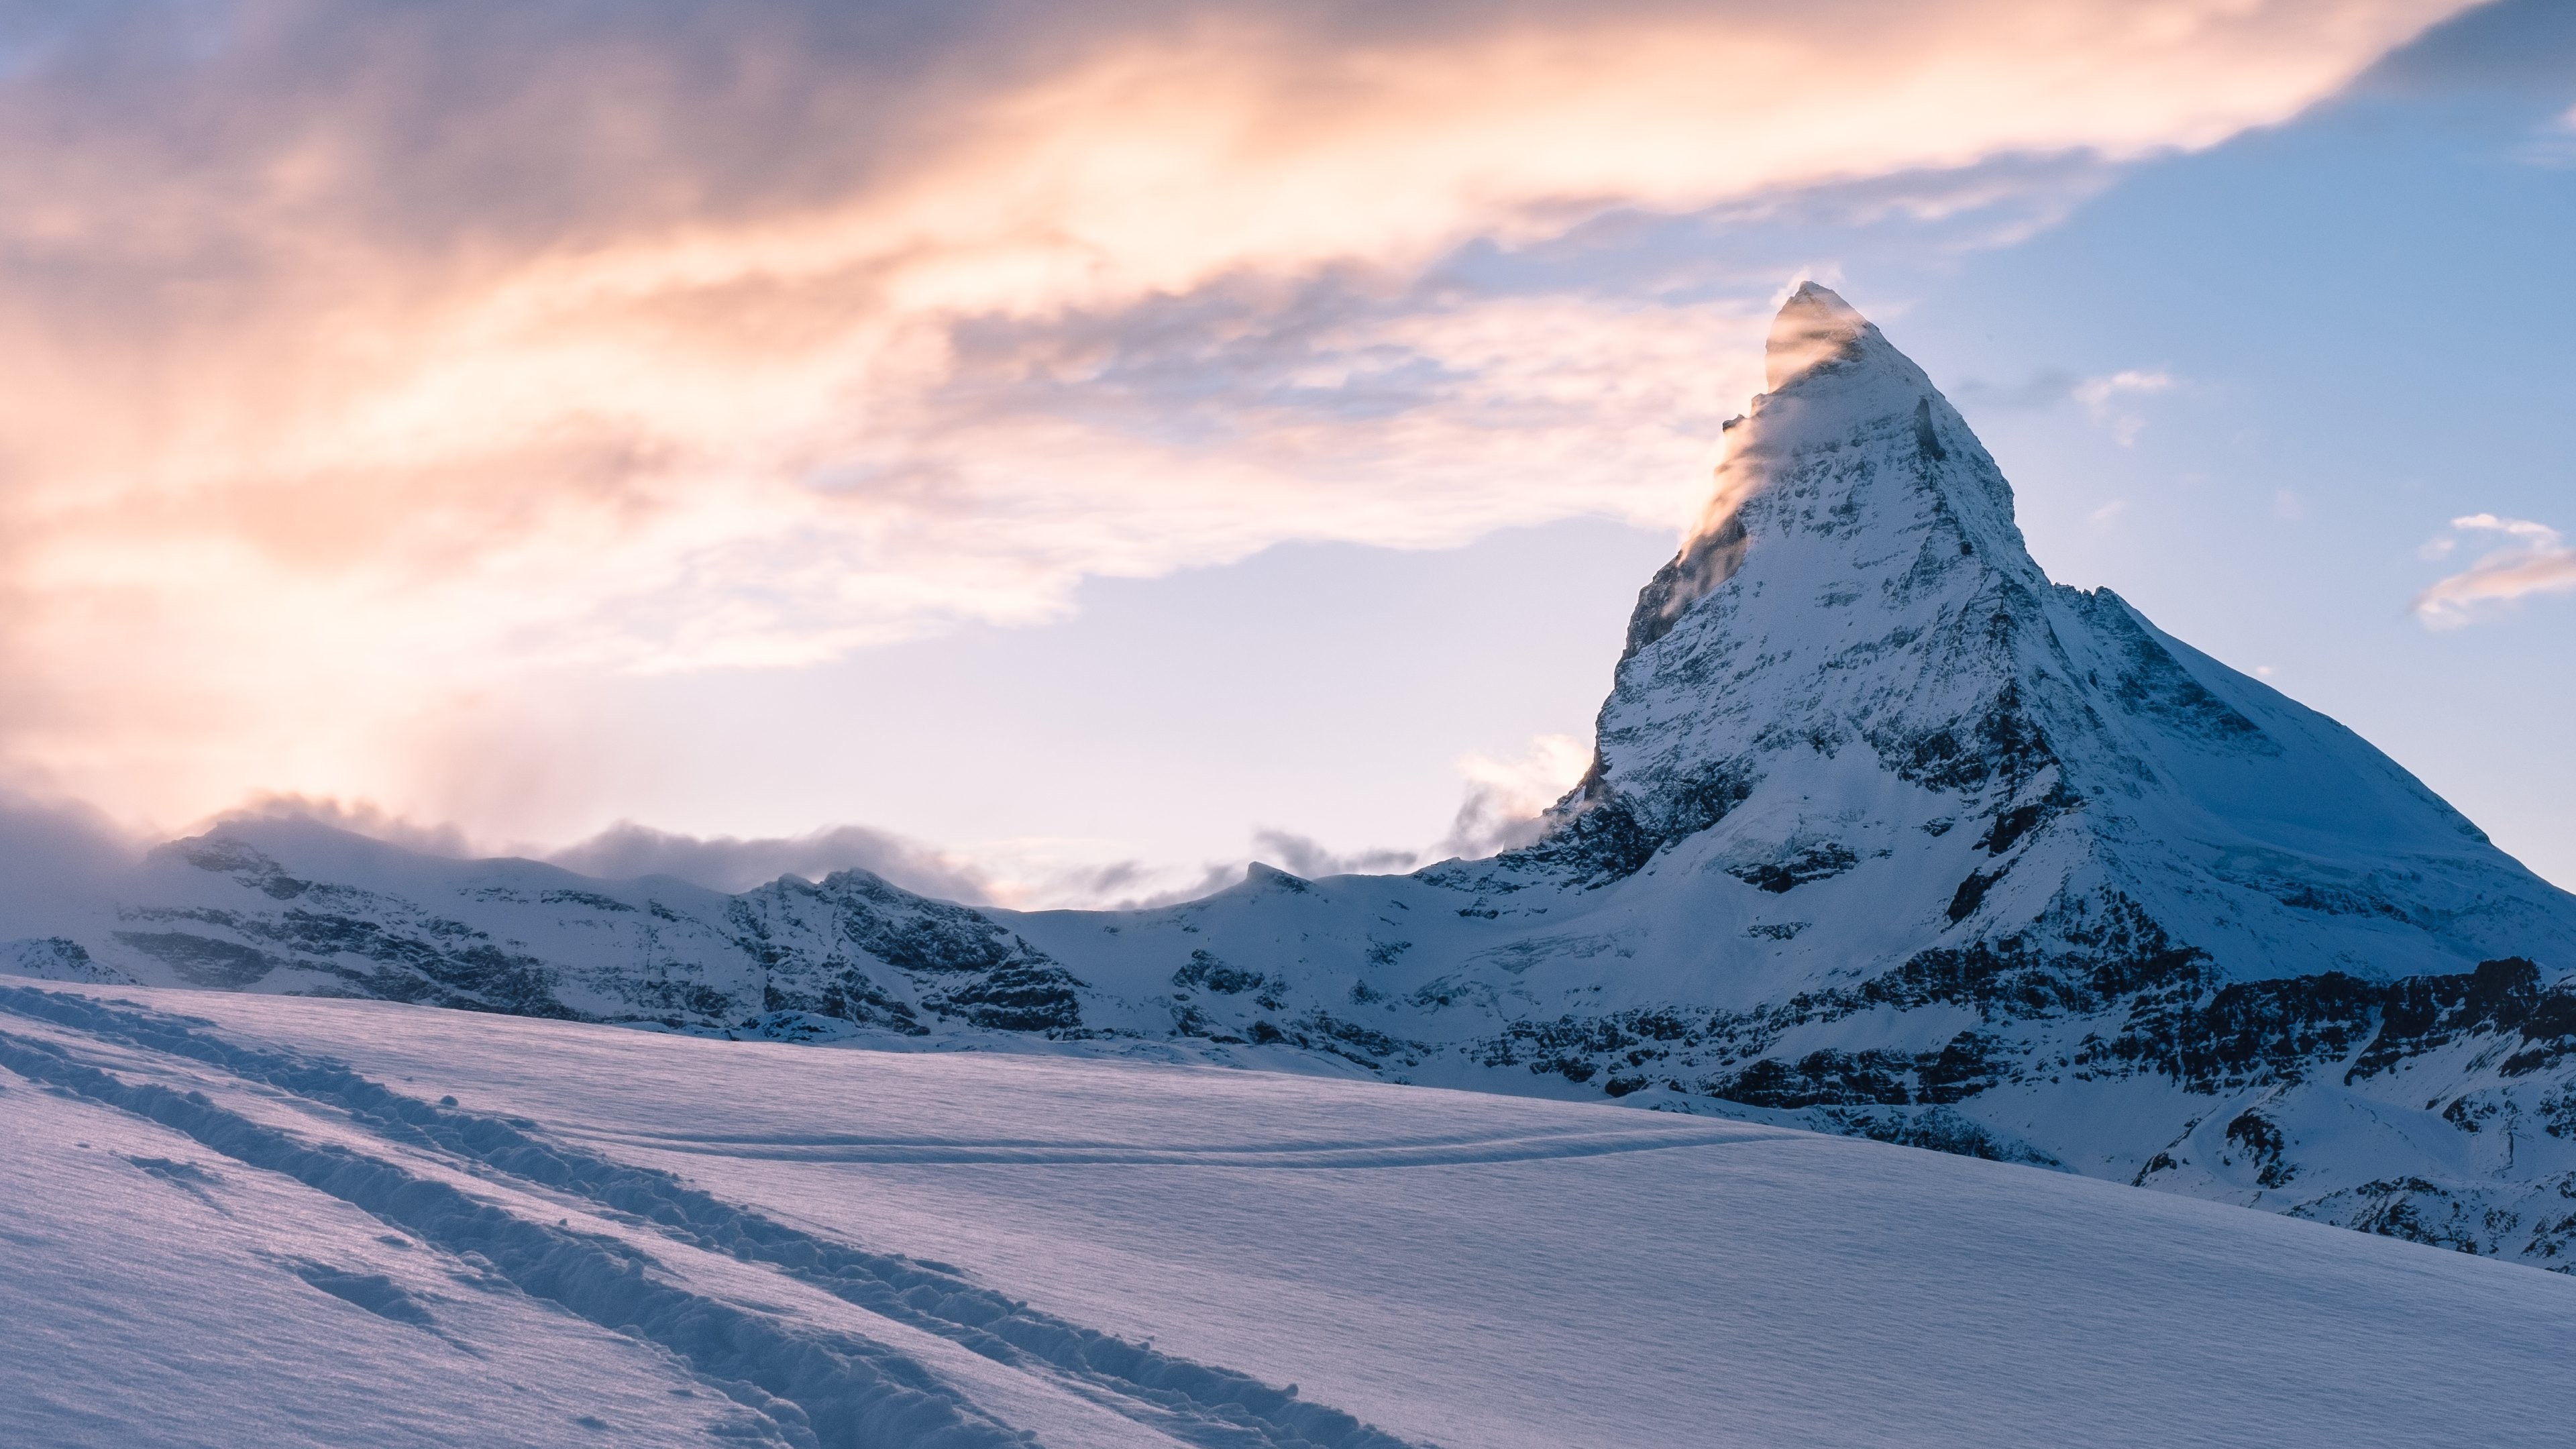 3840x2160 4K HD Wallpaper: Matterhorn - mountain peak from the Swiss Alps